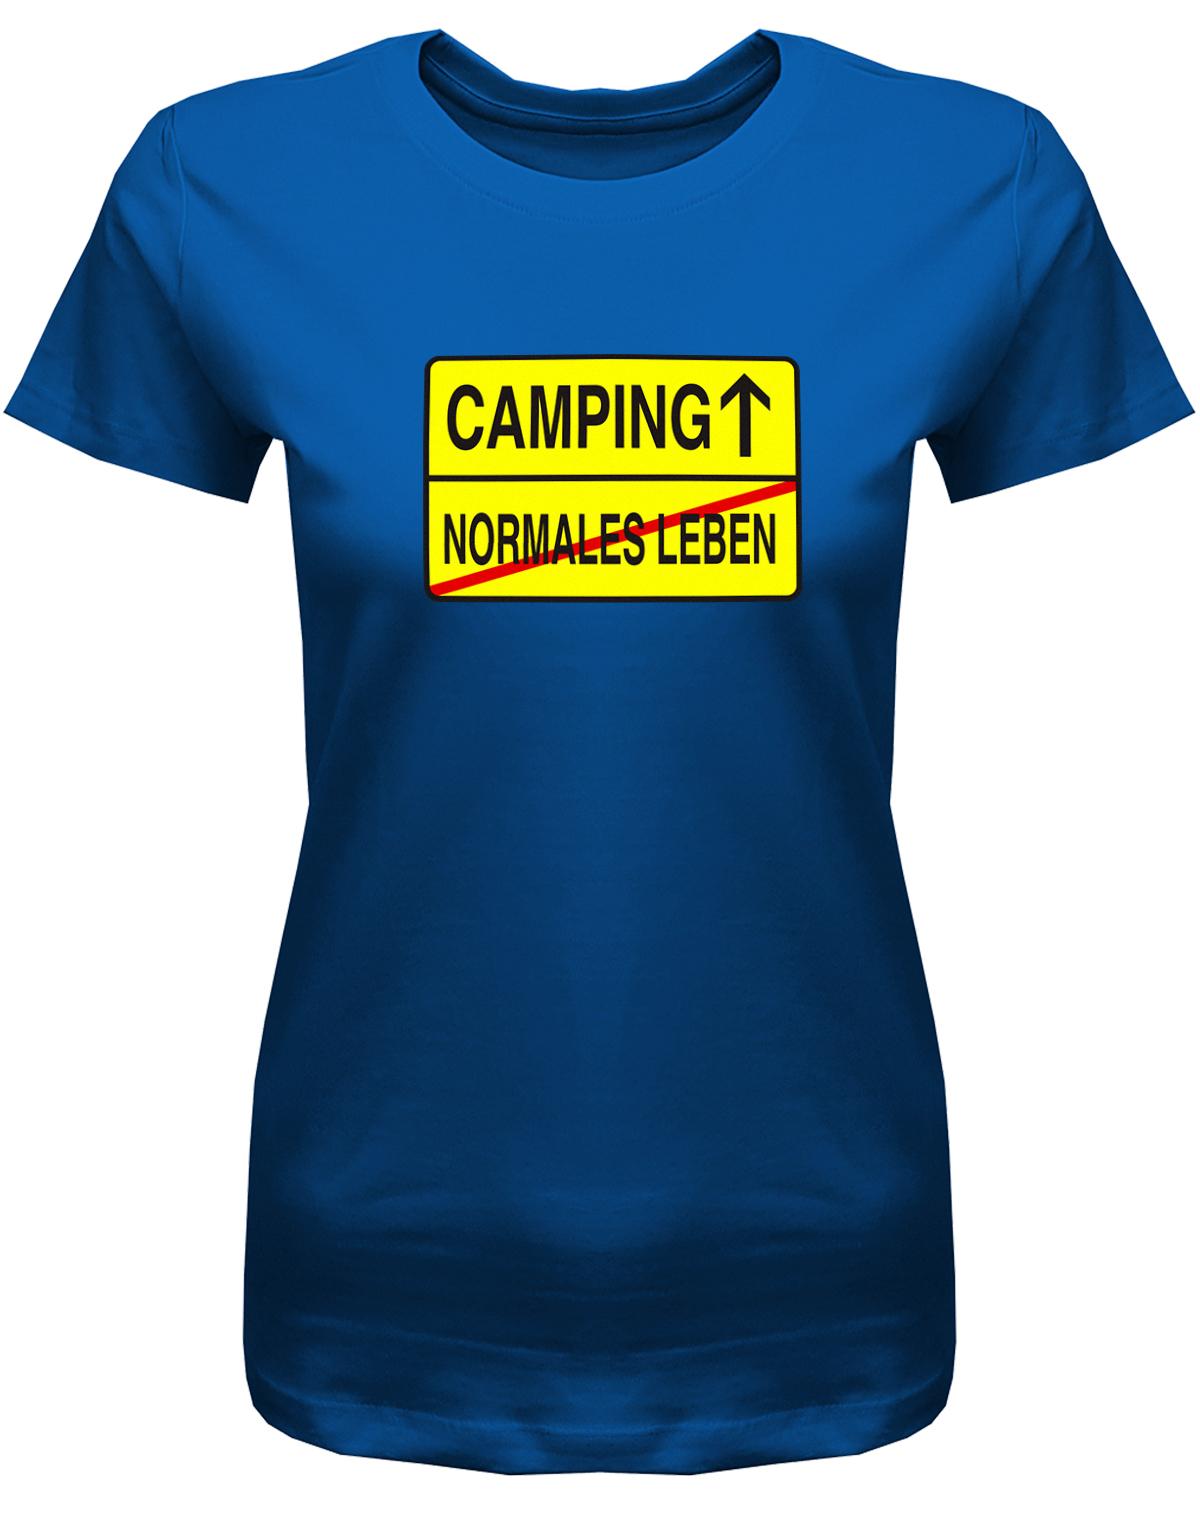 Camping-Normales-leben-Ortschild-Damen-Camping-Shirt-Royalblau